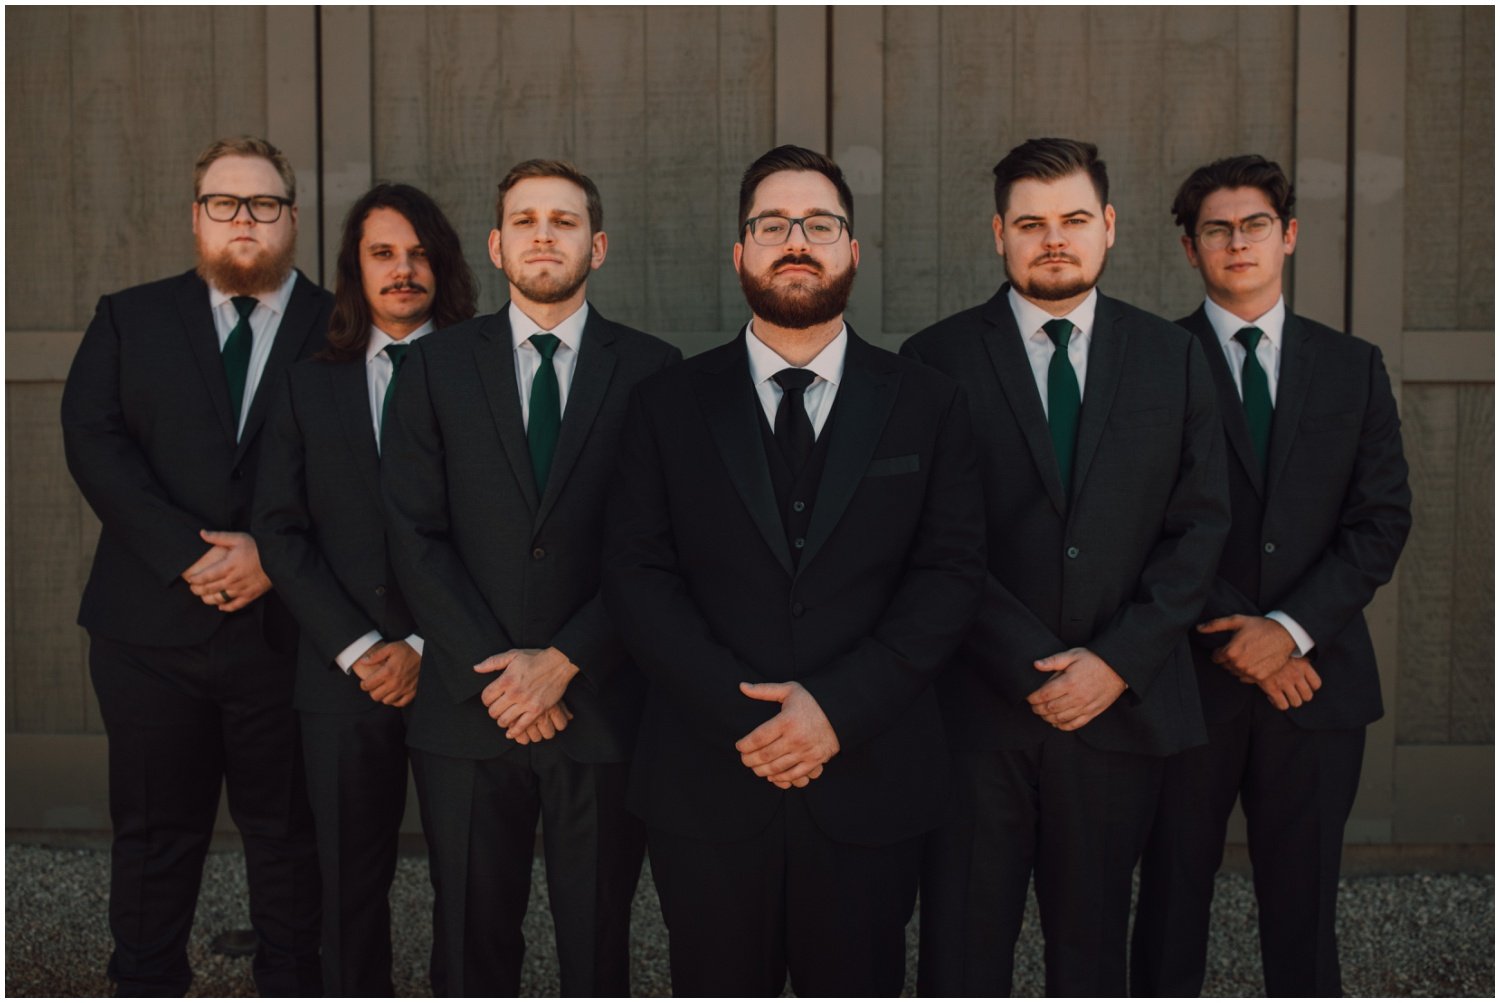 groomsmen wearing black suits and emerald green ties